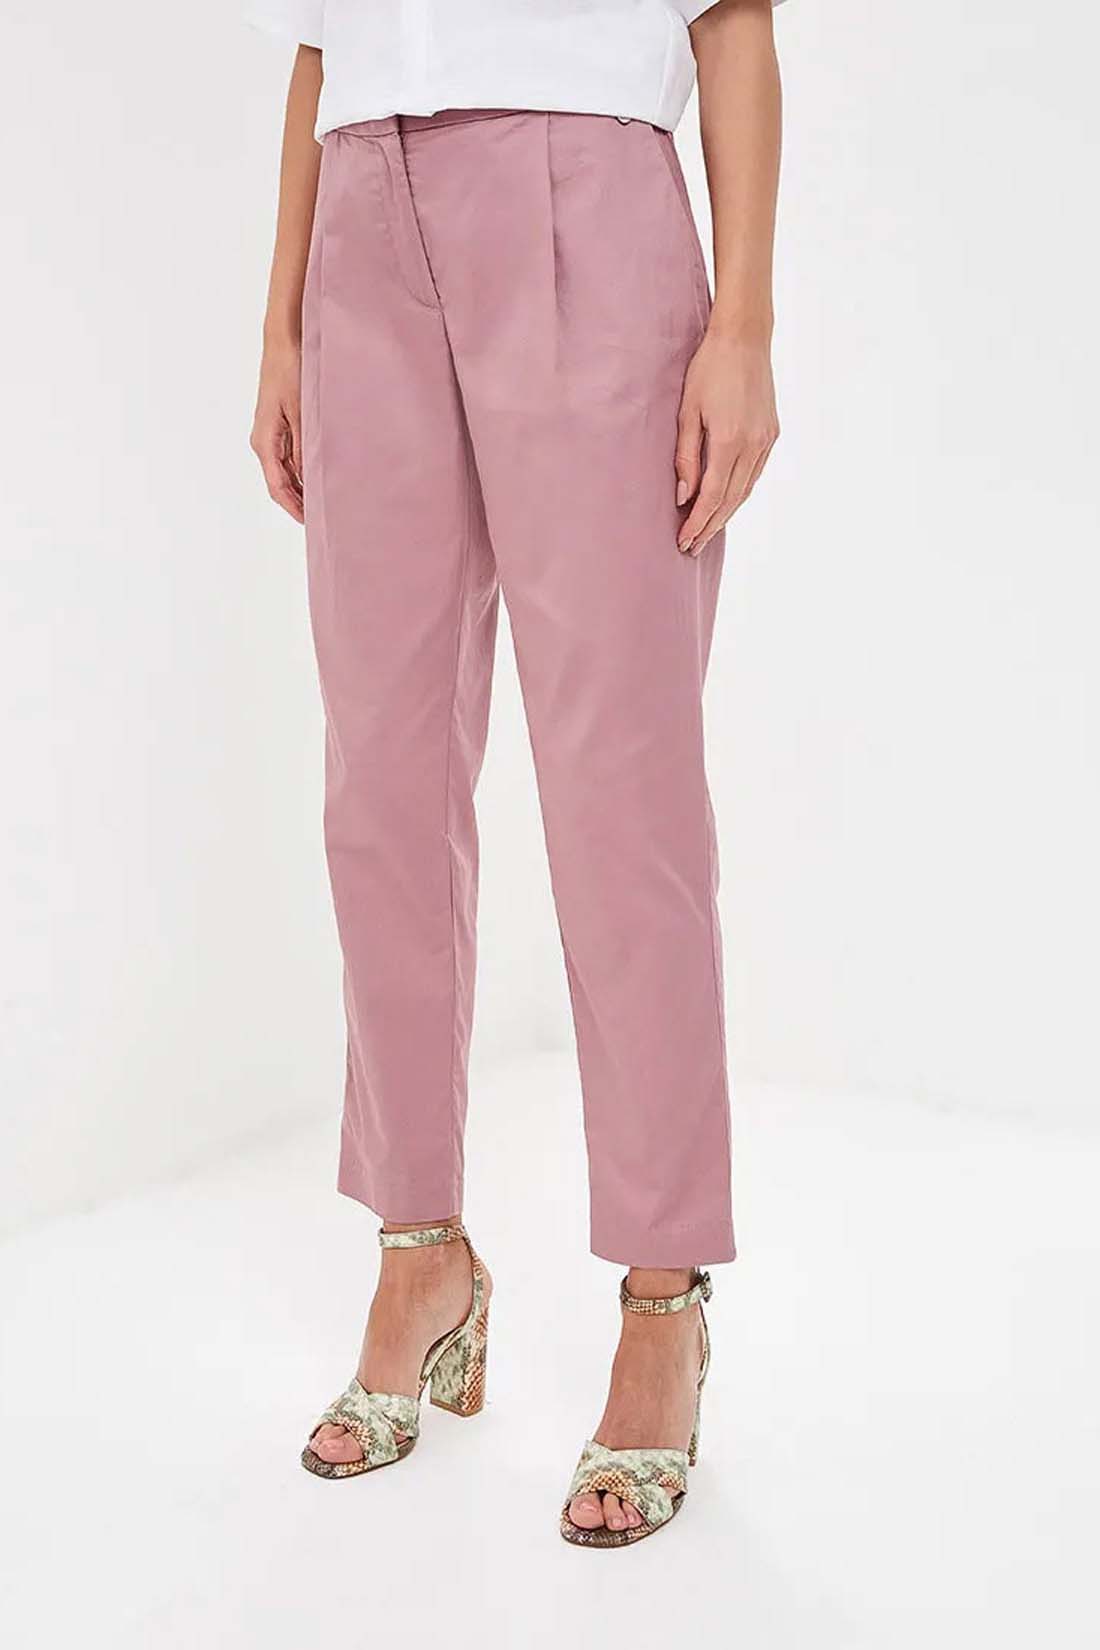 Розовые брюки-чиносы (арт. baon B299031), размер M, цвет розовый Розовые брюки-чиносы (арт. baon B299031) - фото 1